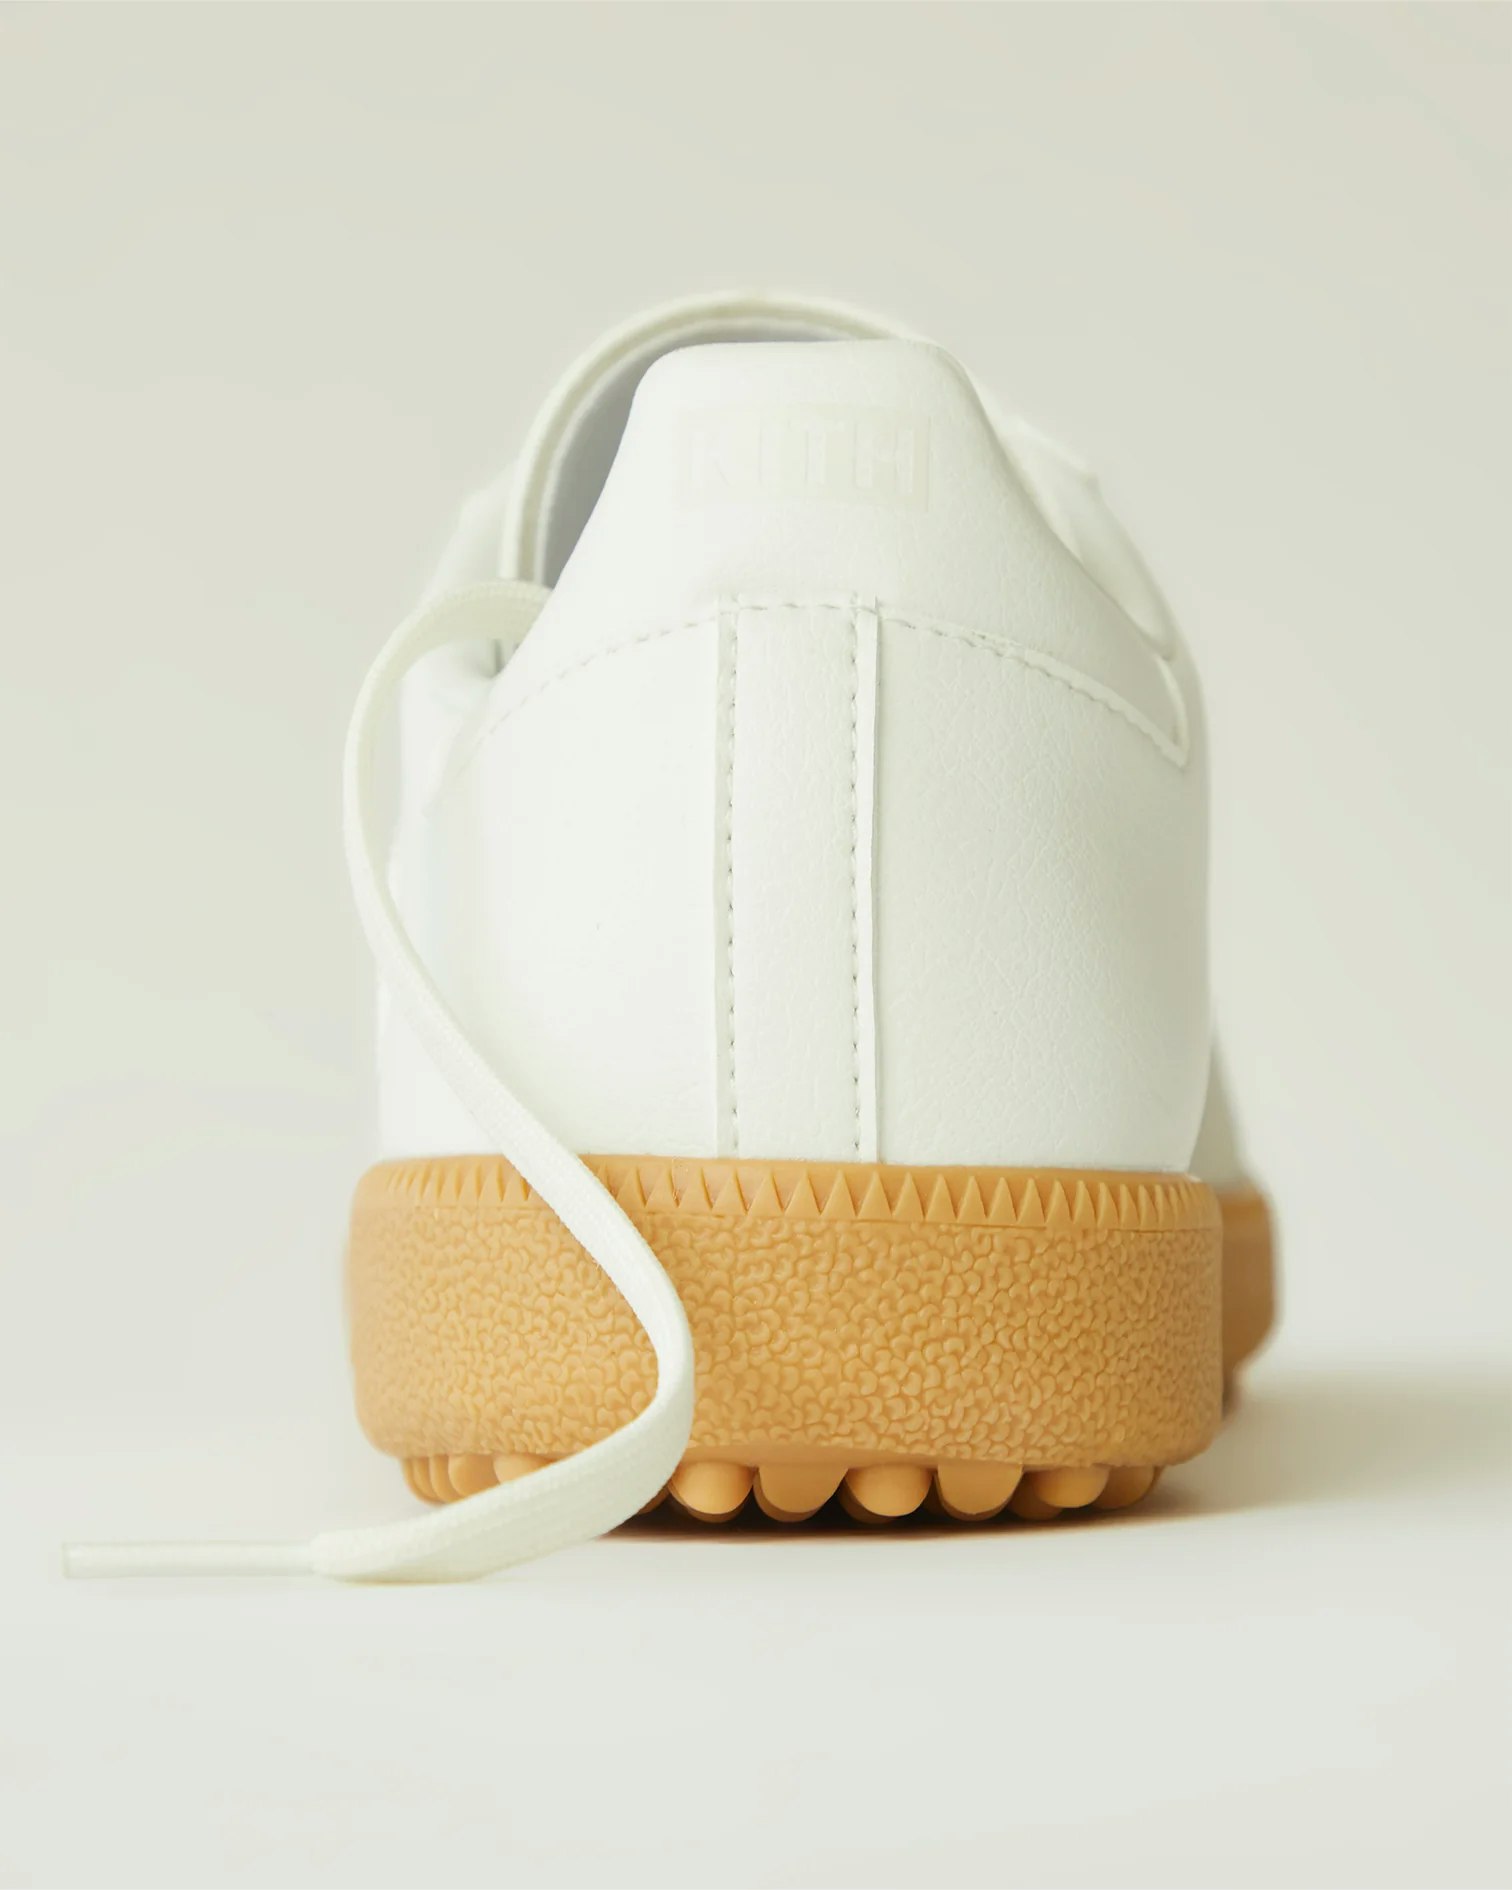 Kith x adidas Samba Golf "White/Gum"